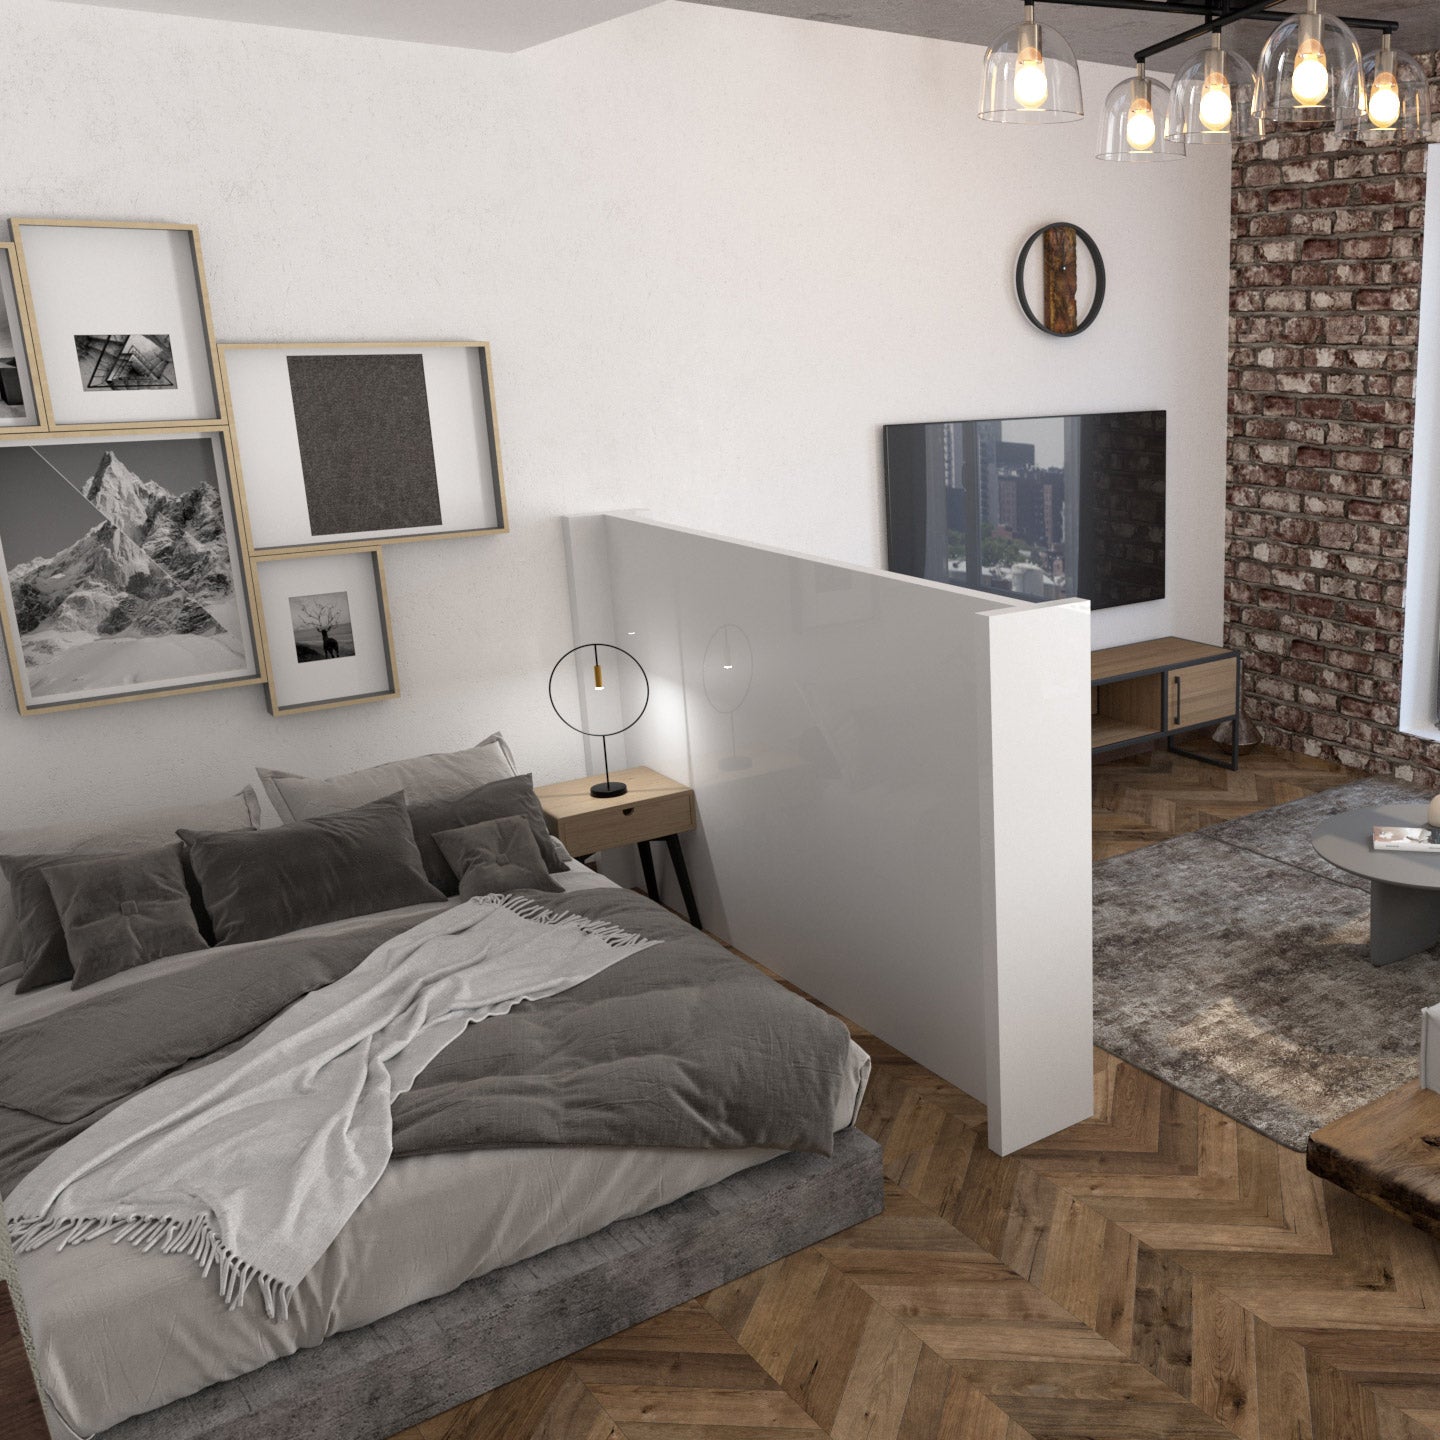 Tutustu 55+ imagen studio apartment bedroom divider